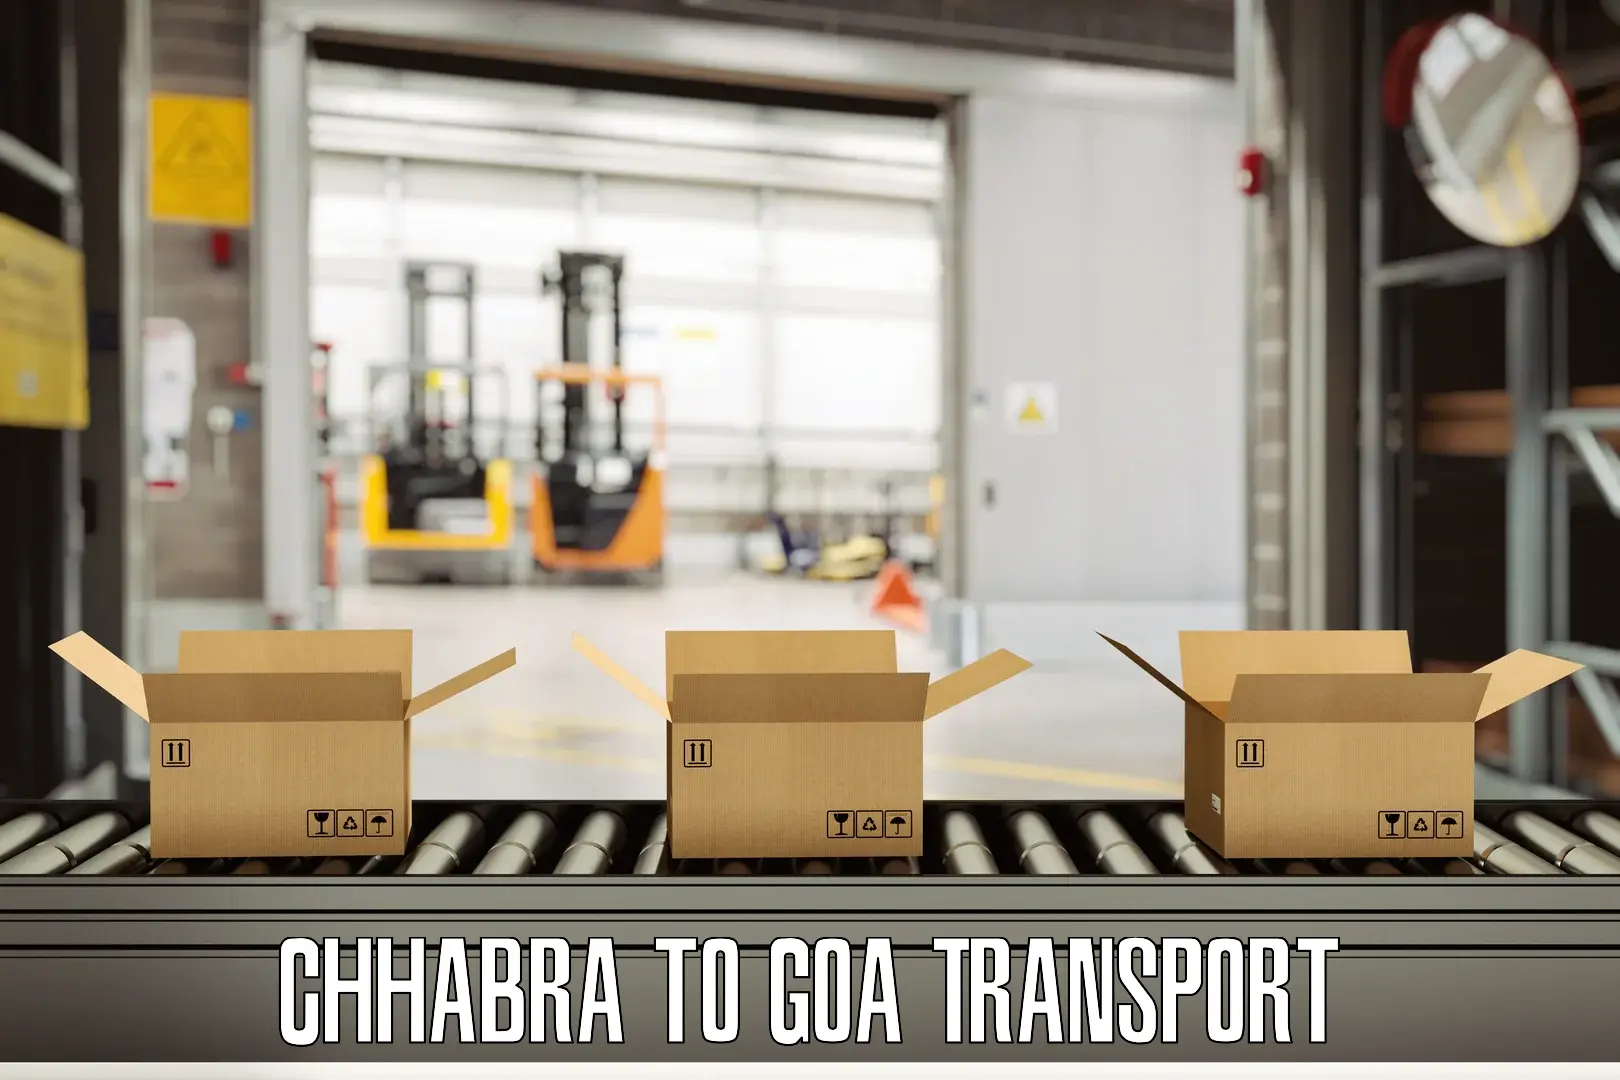 Sending bike to another city Chhabra to IIT Goa